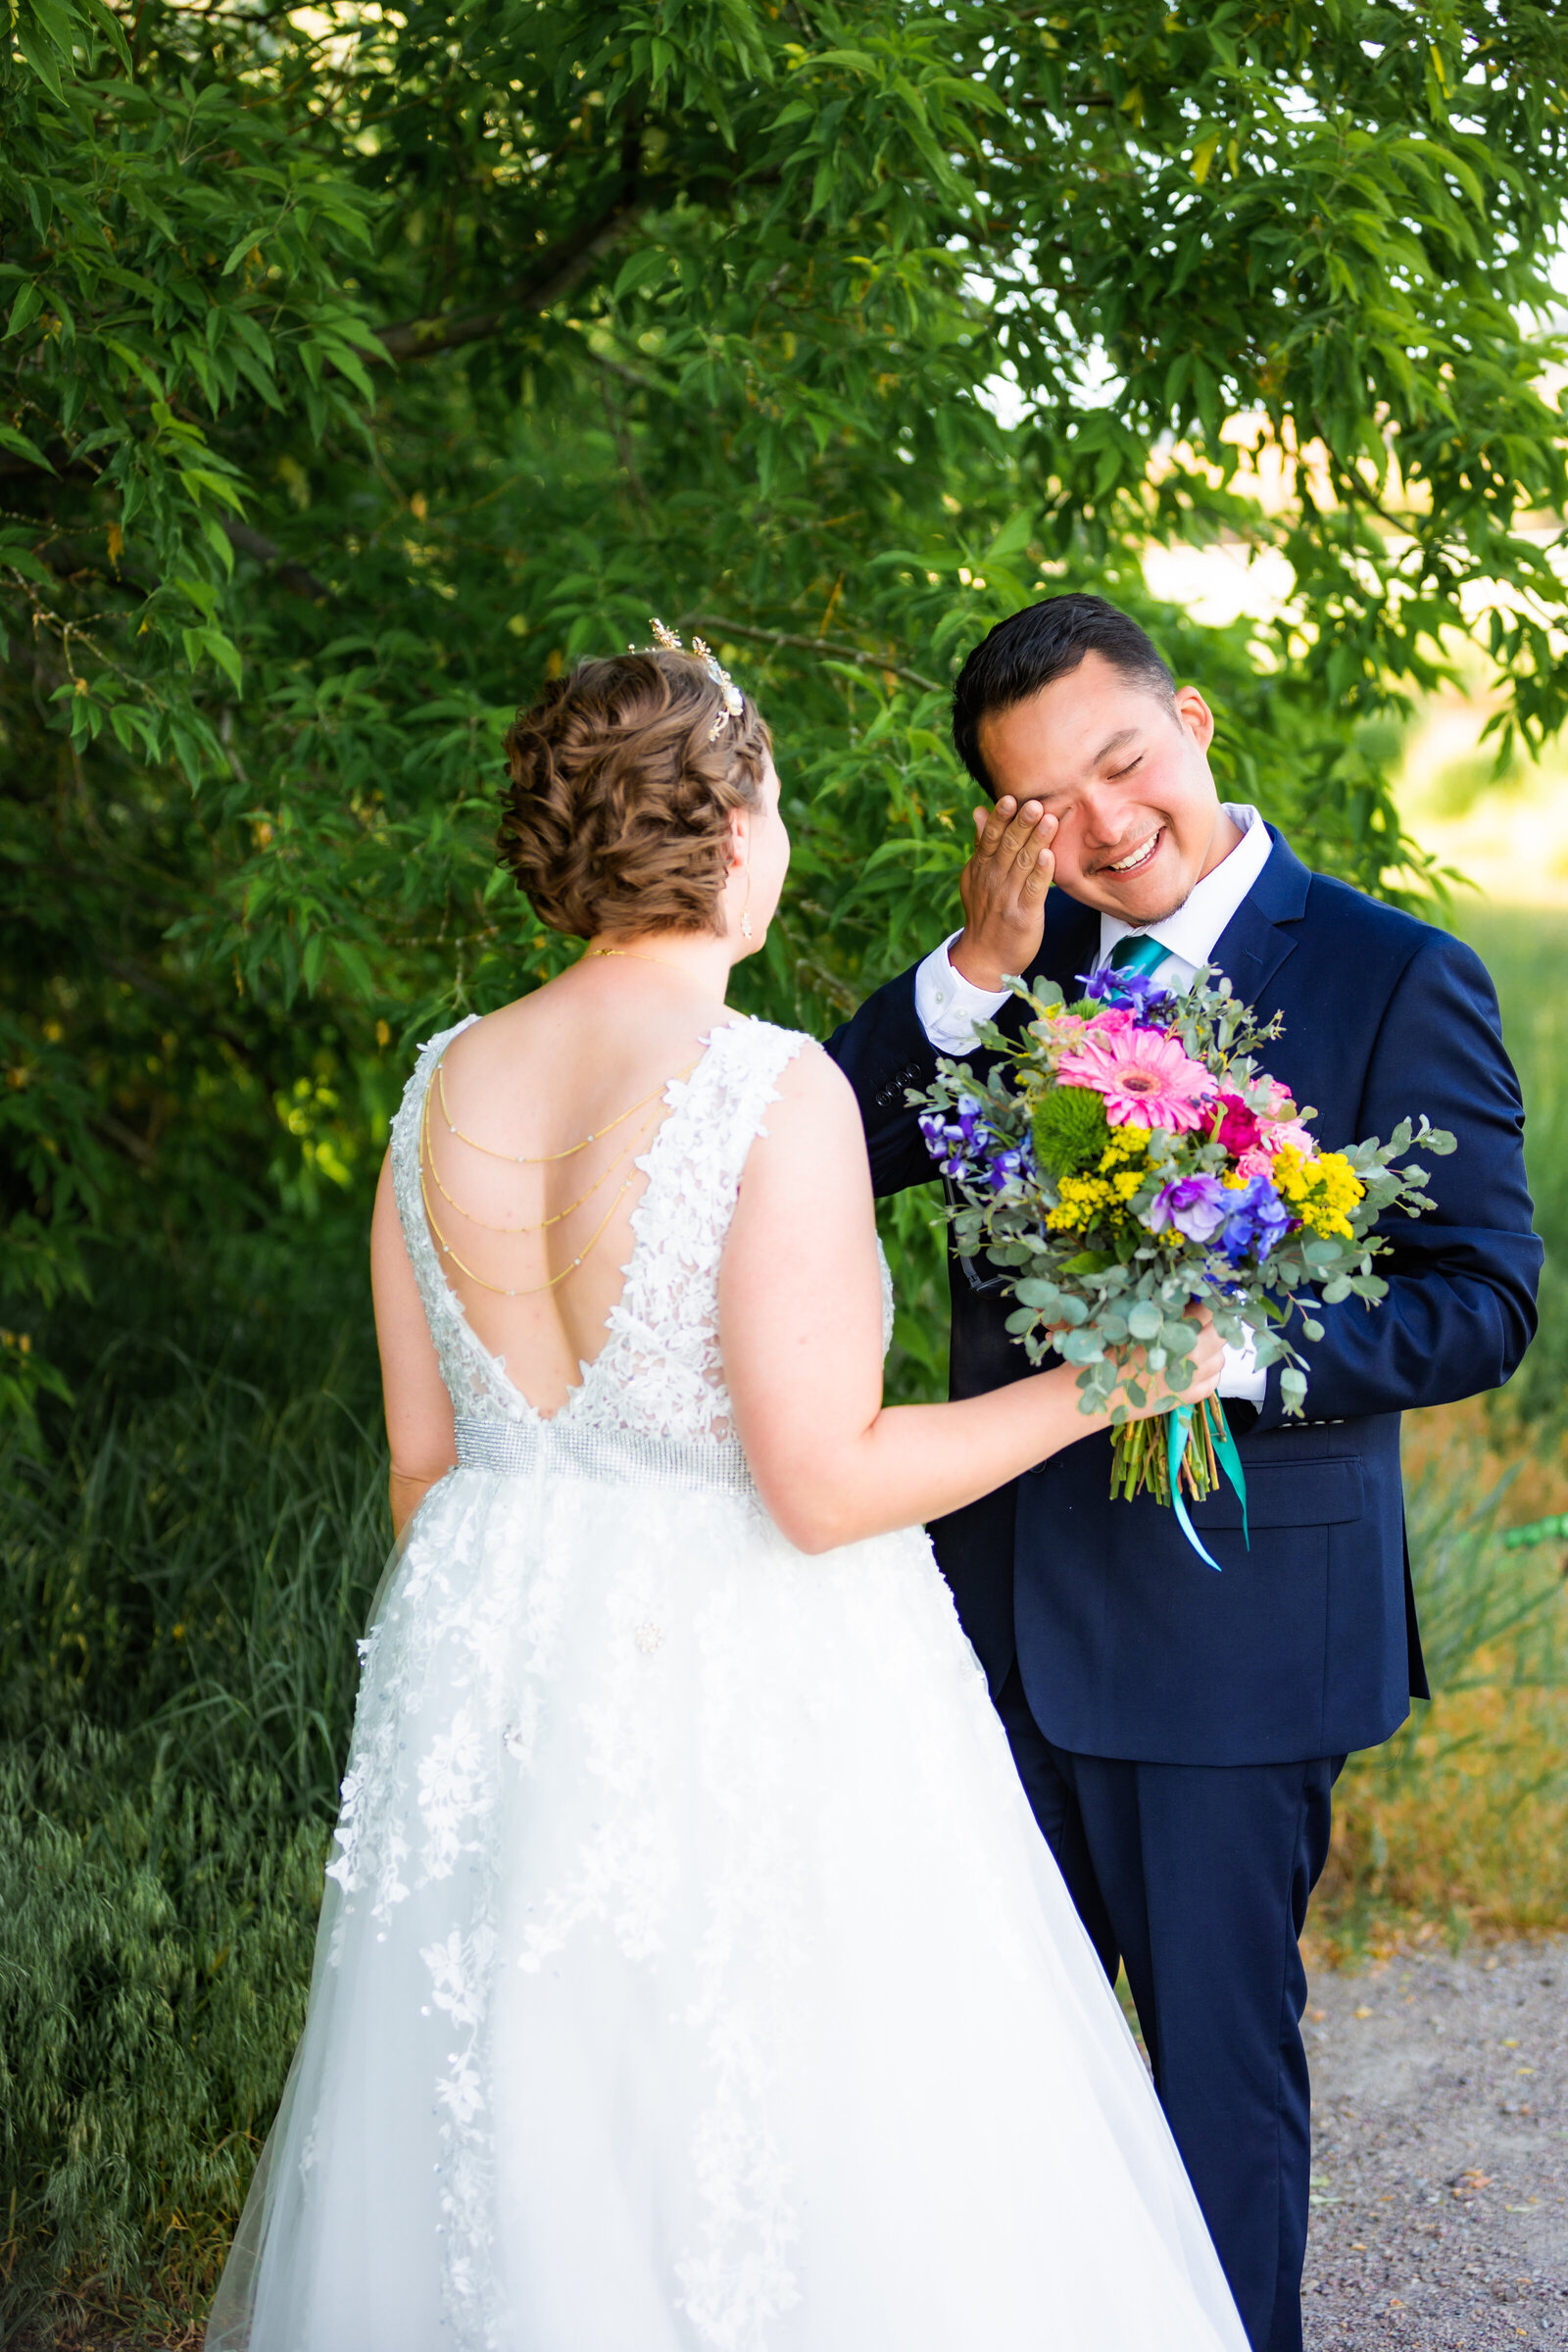 Jackson Hole wedding photographers capture first look before Jackson Hole elopement